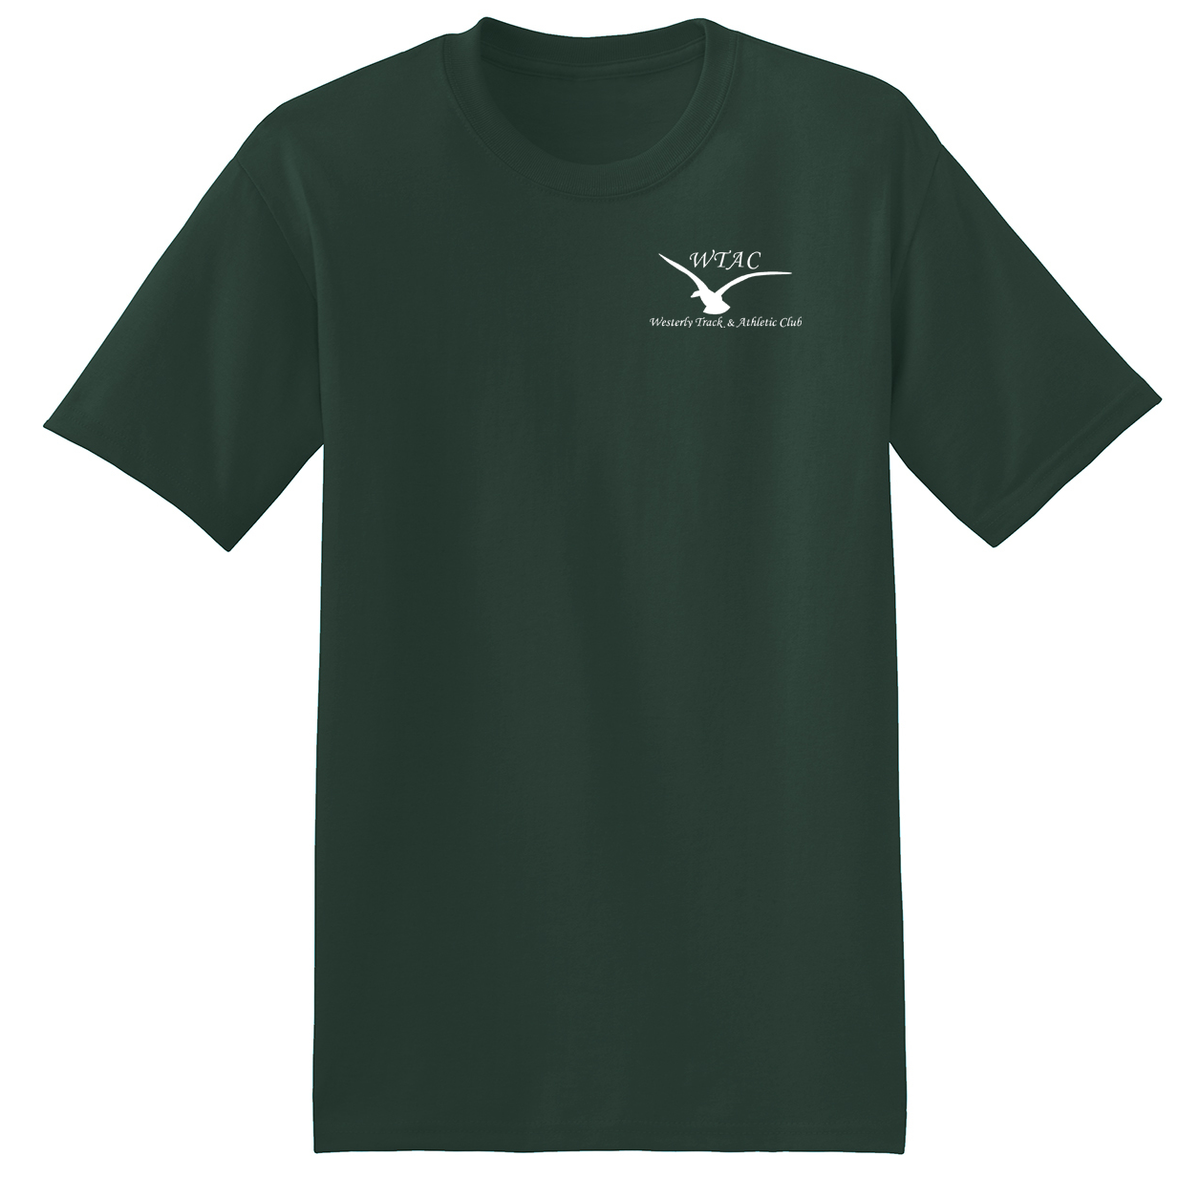 Westerly Track & Athletic Club T-Shirt